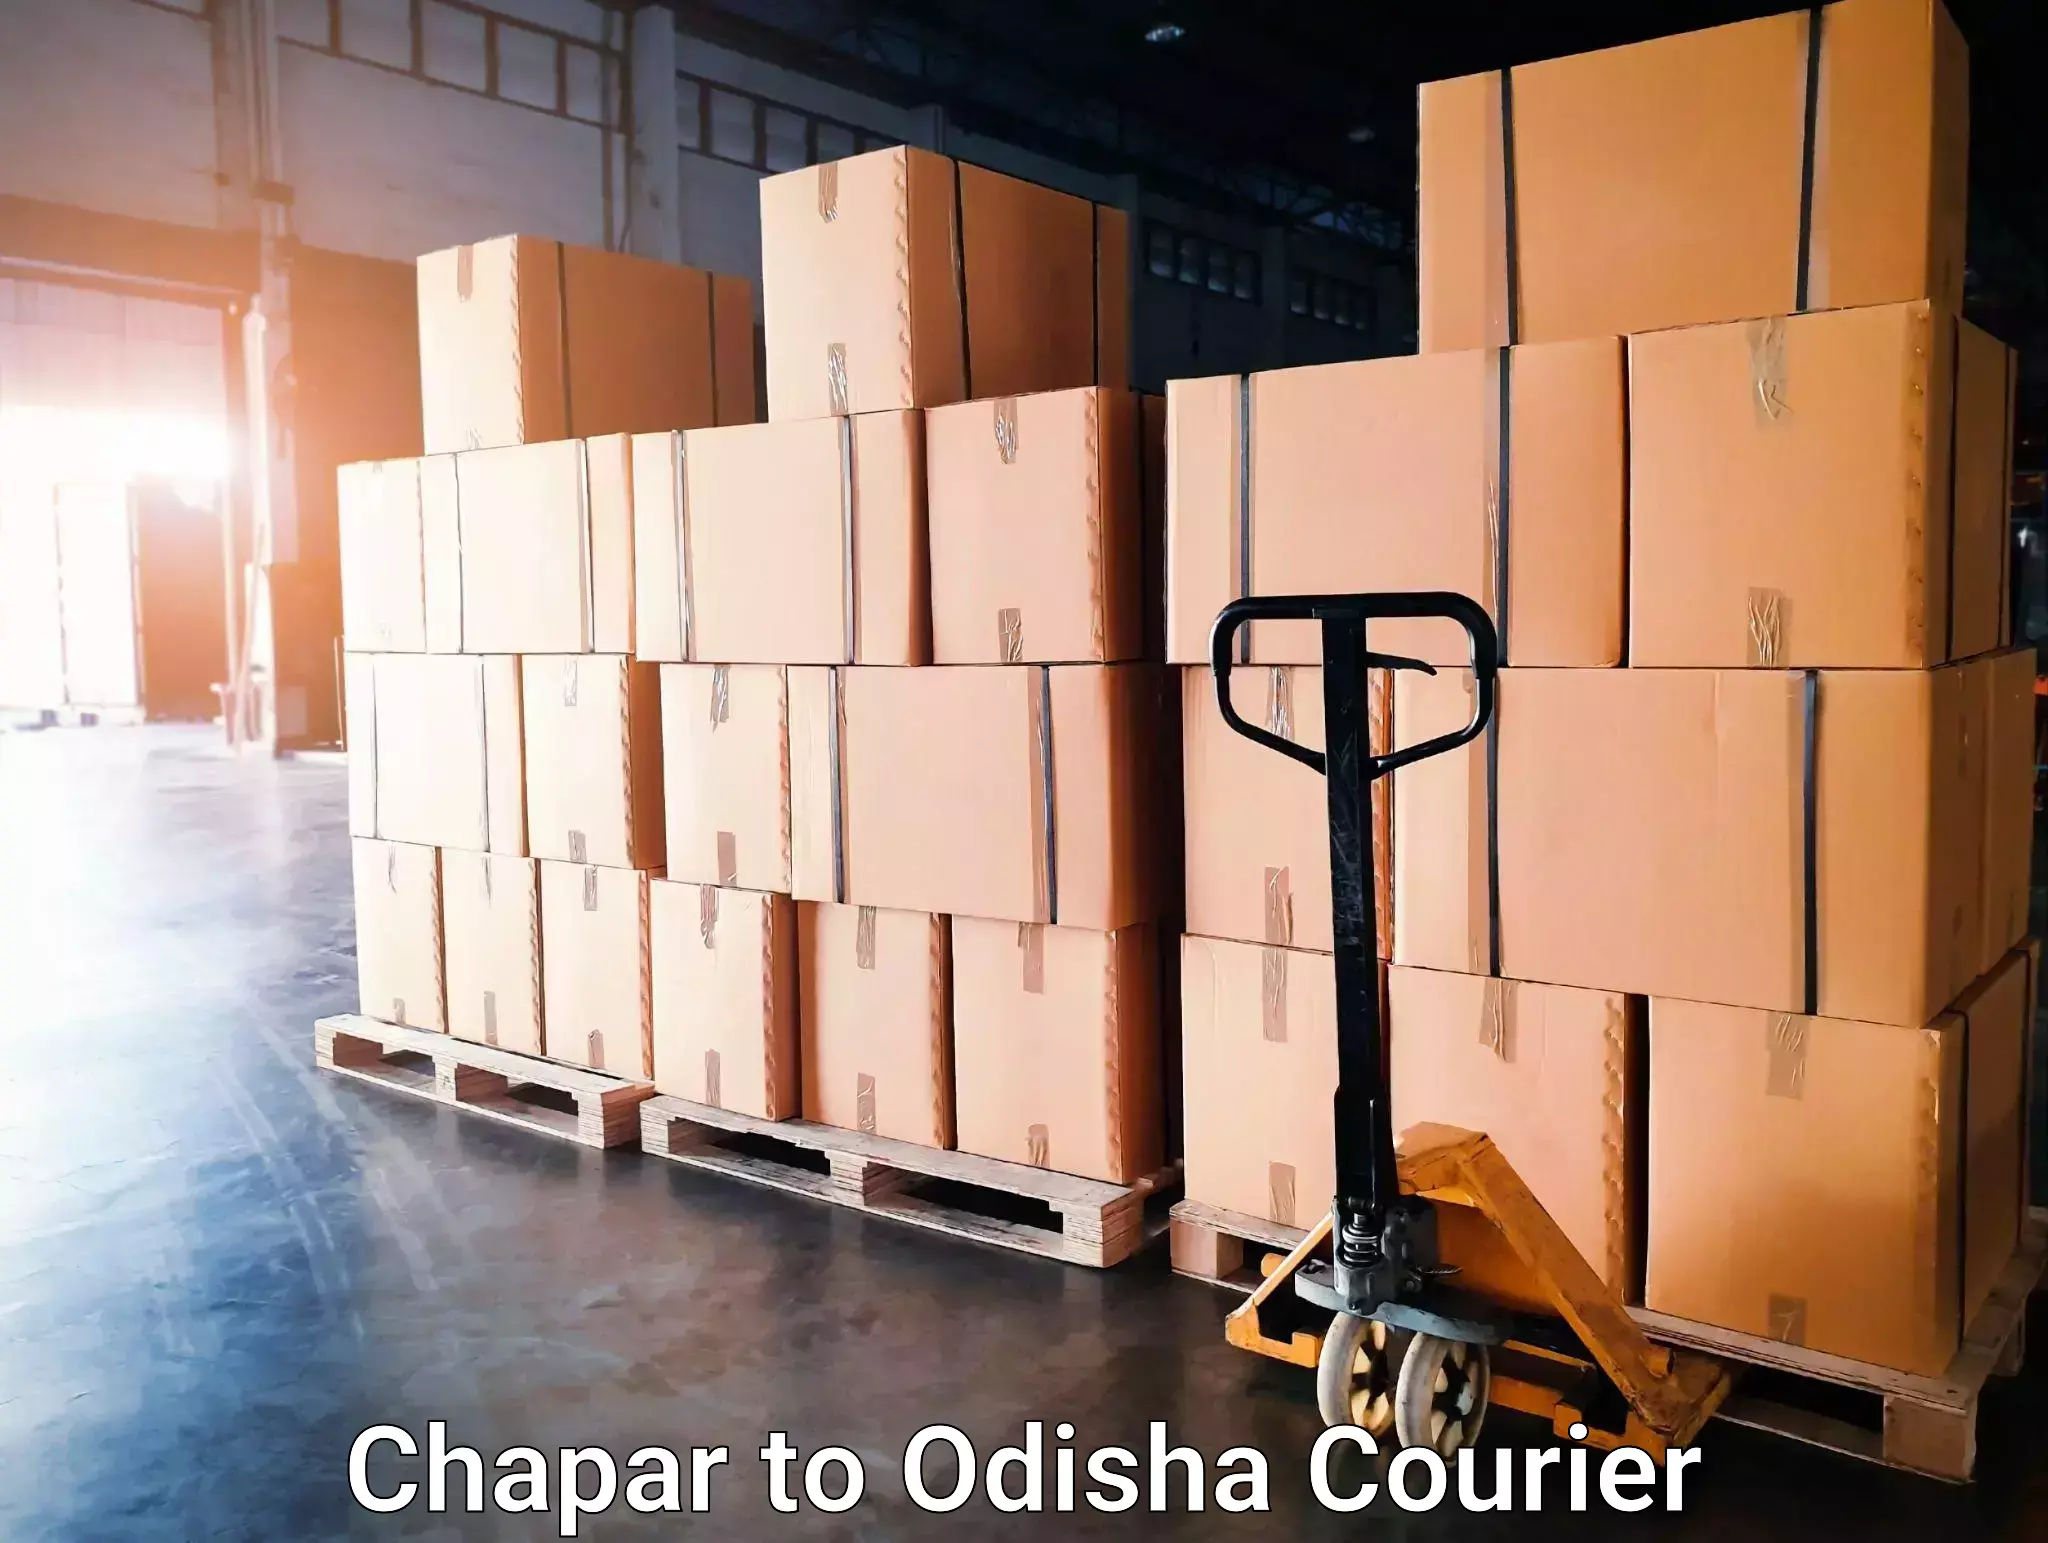 Nationwide delivery network Chapar to Kishorenagar